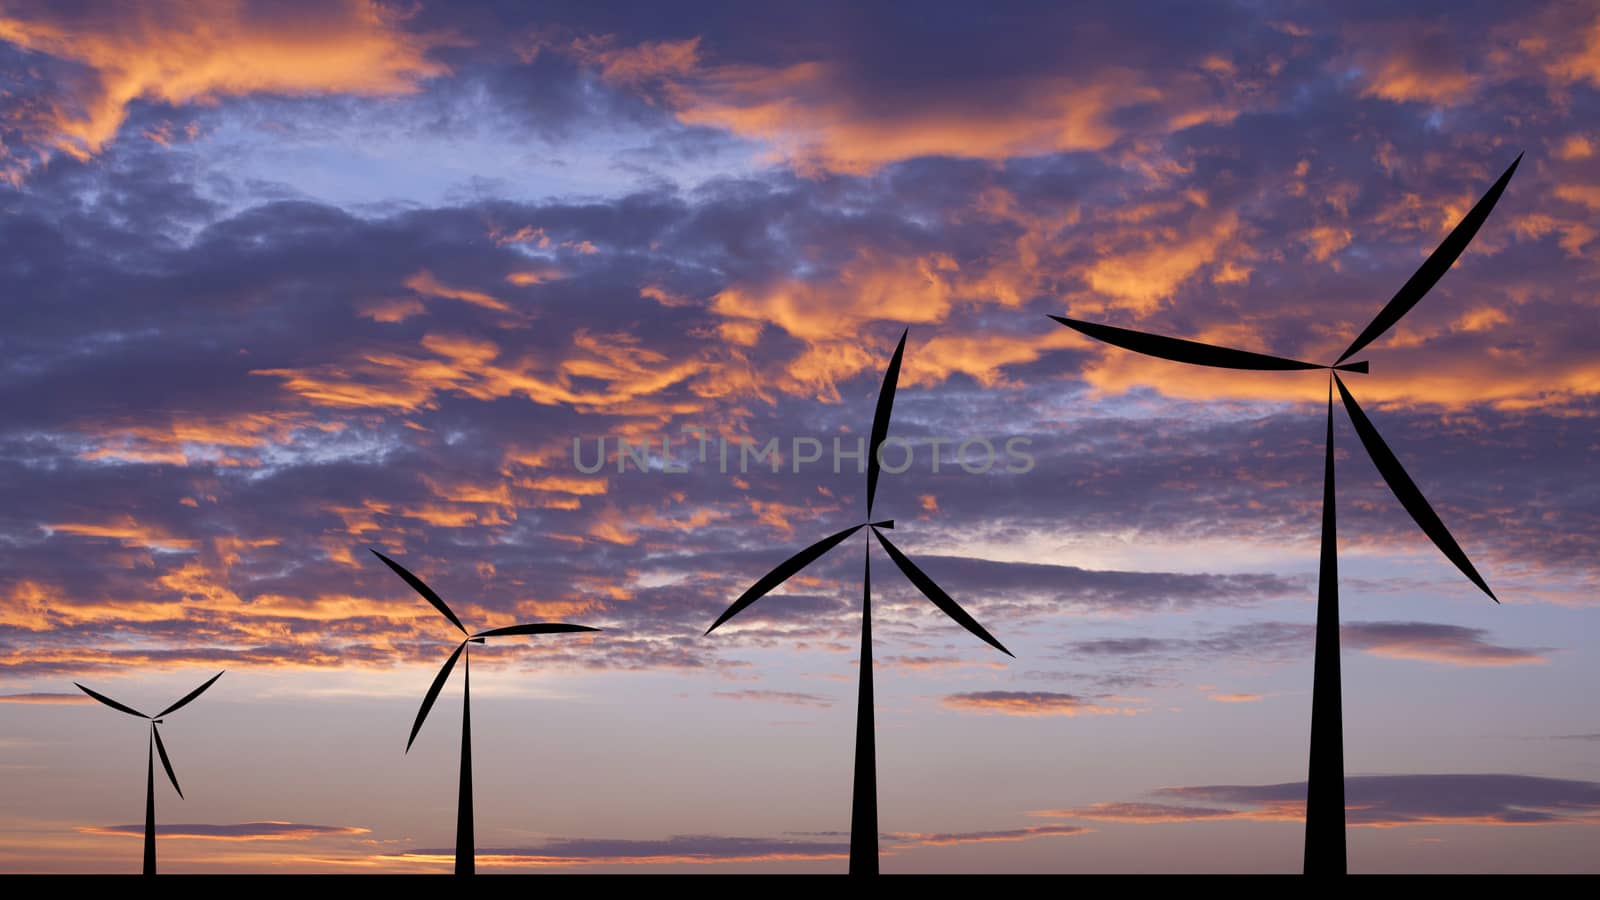  Wind turbine silhouette sunset or sunrise economic system background 